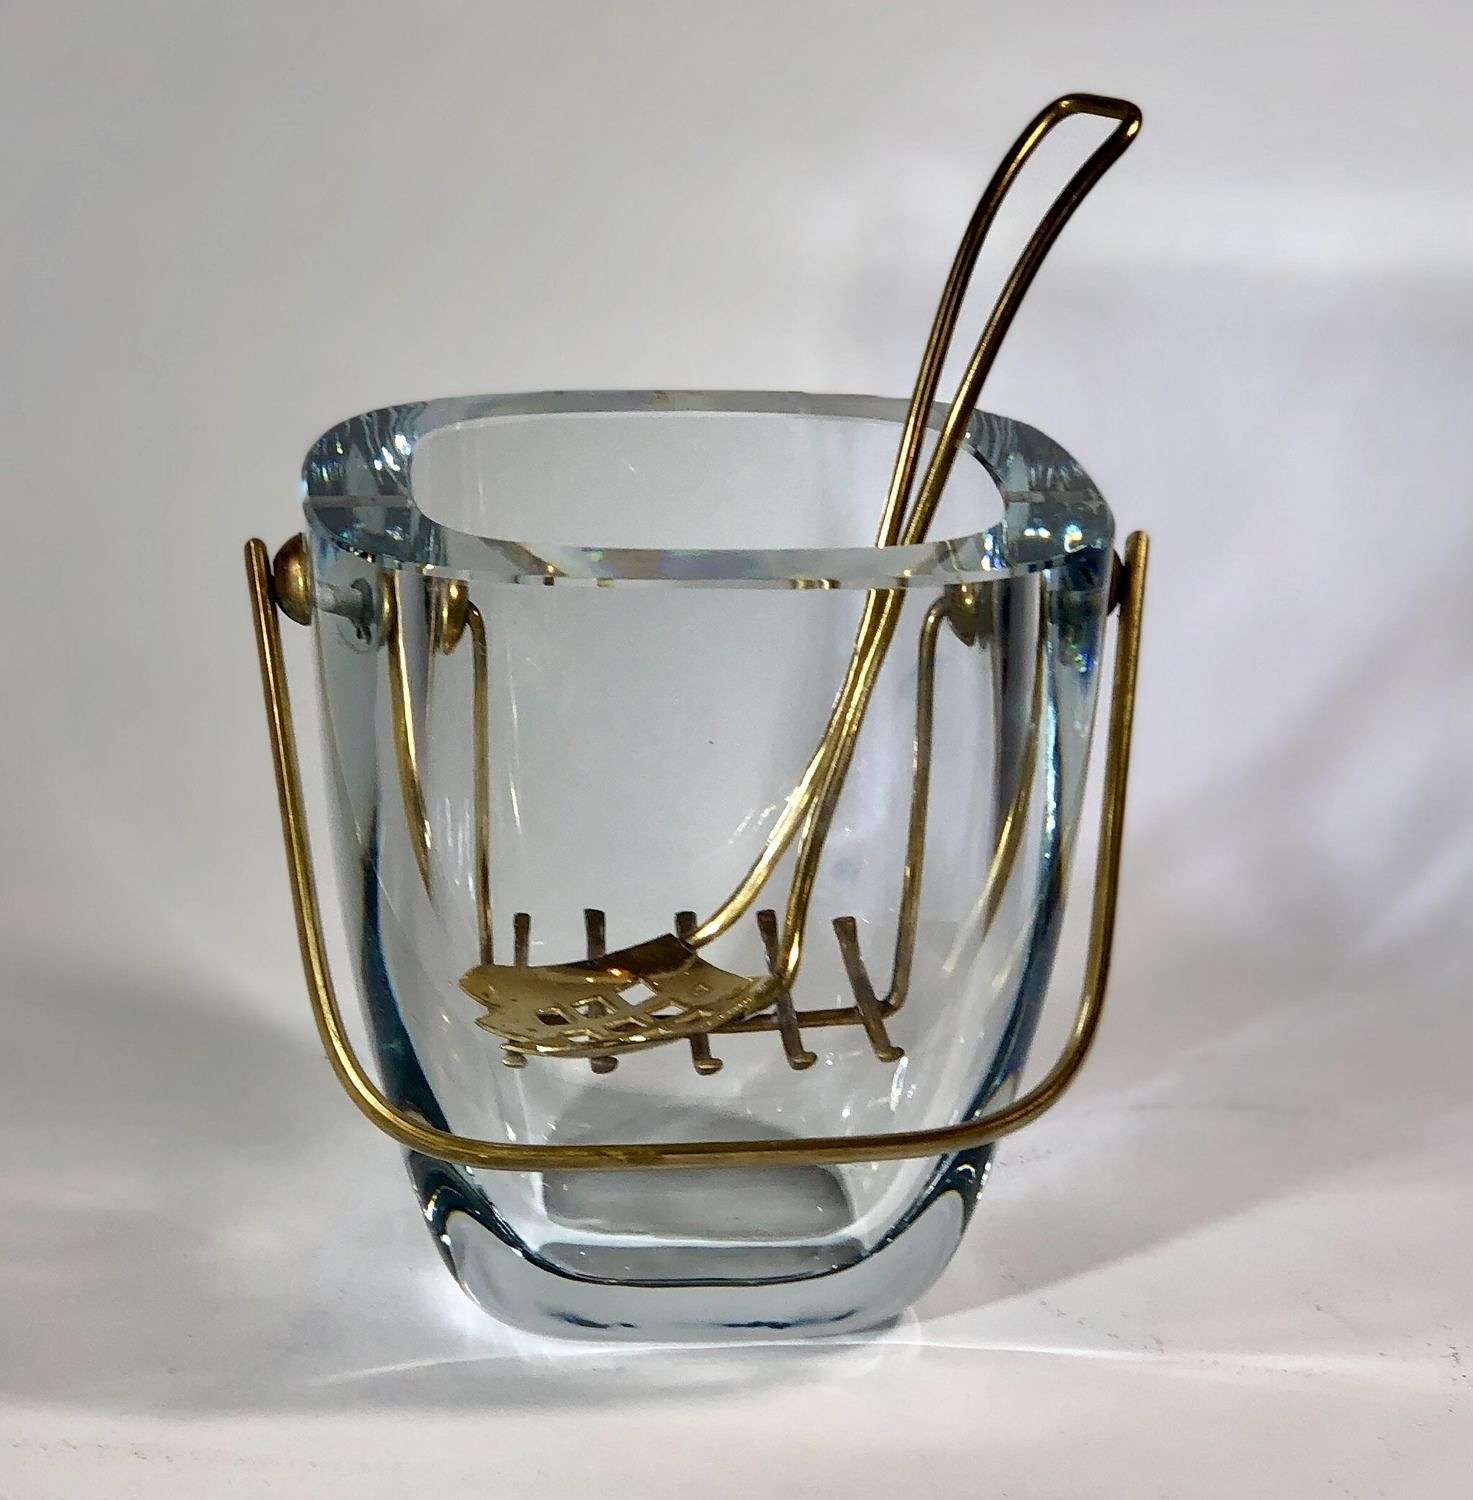 Stunning Mid 20th Century glass and brass ice bucket